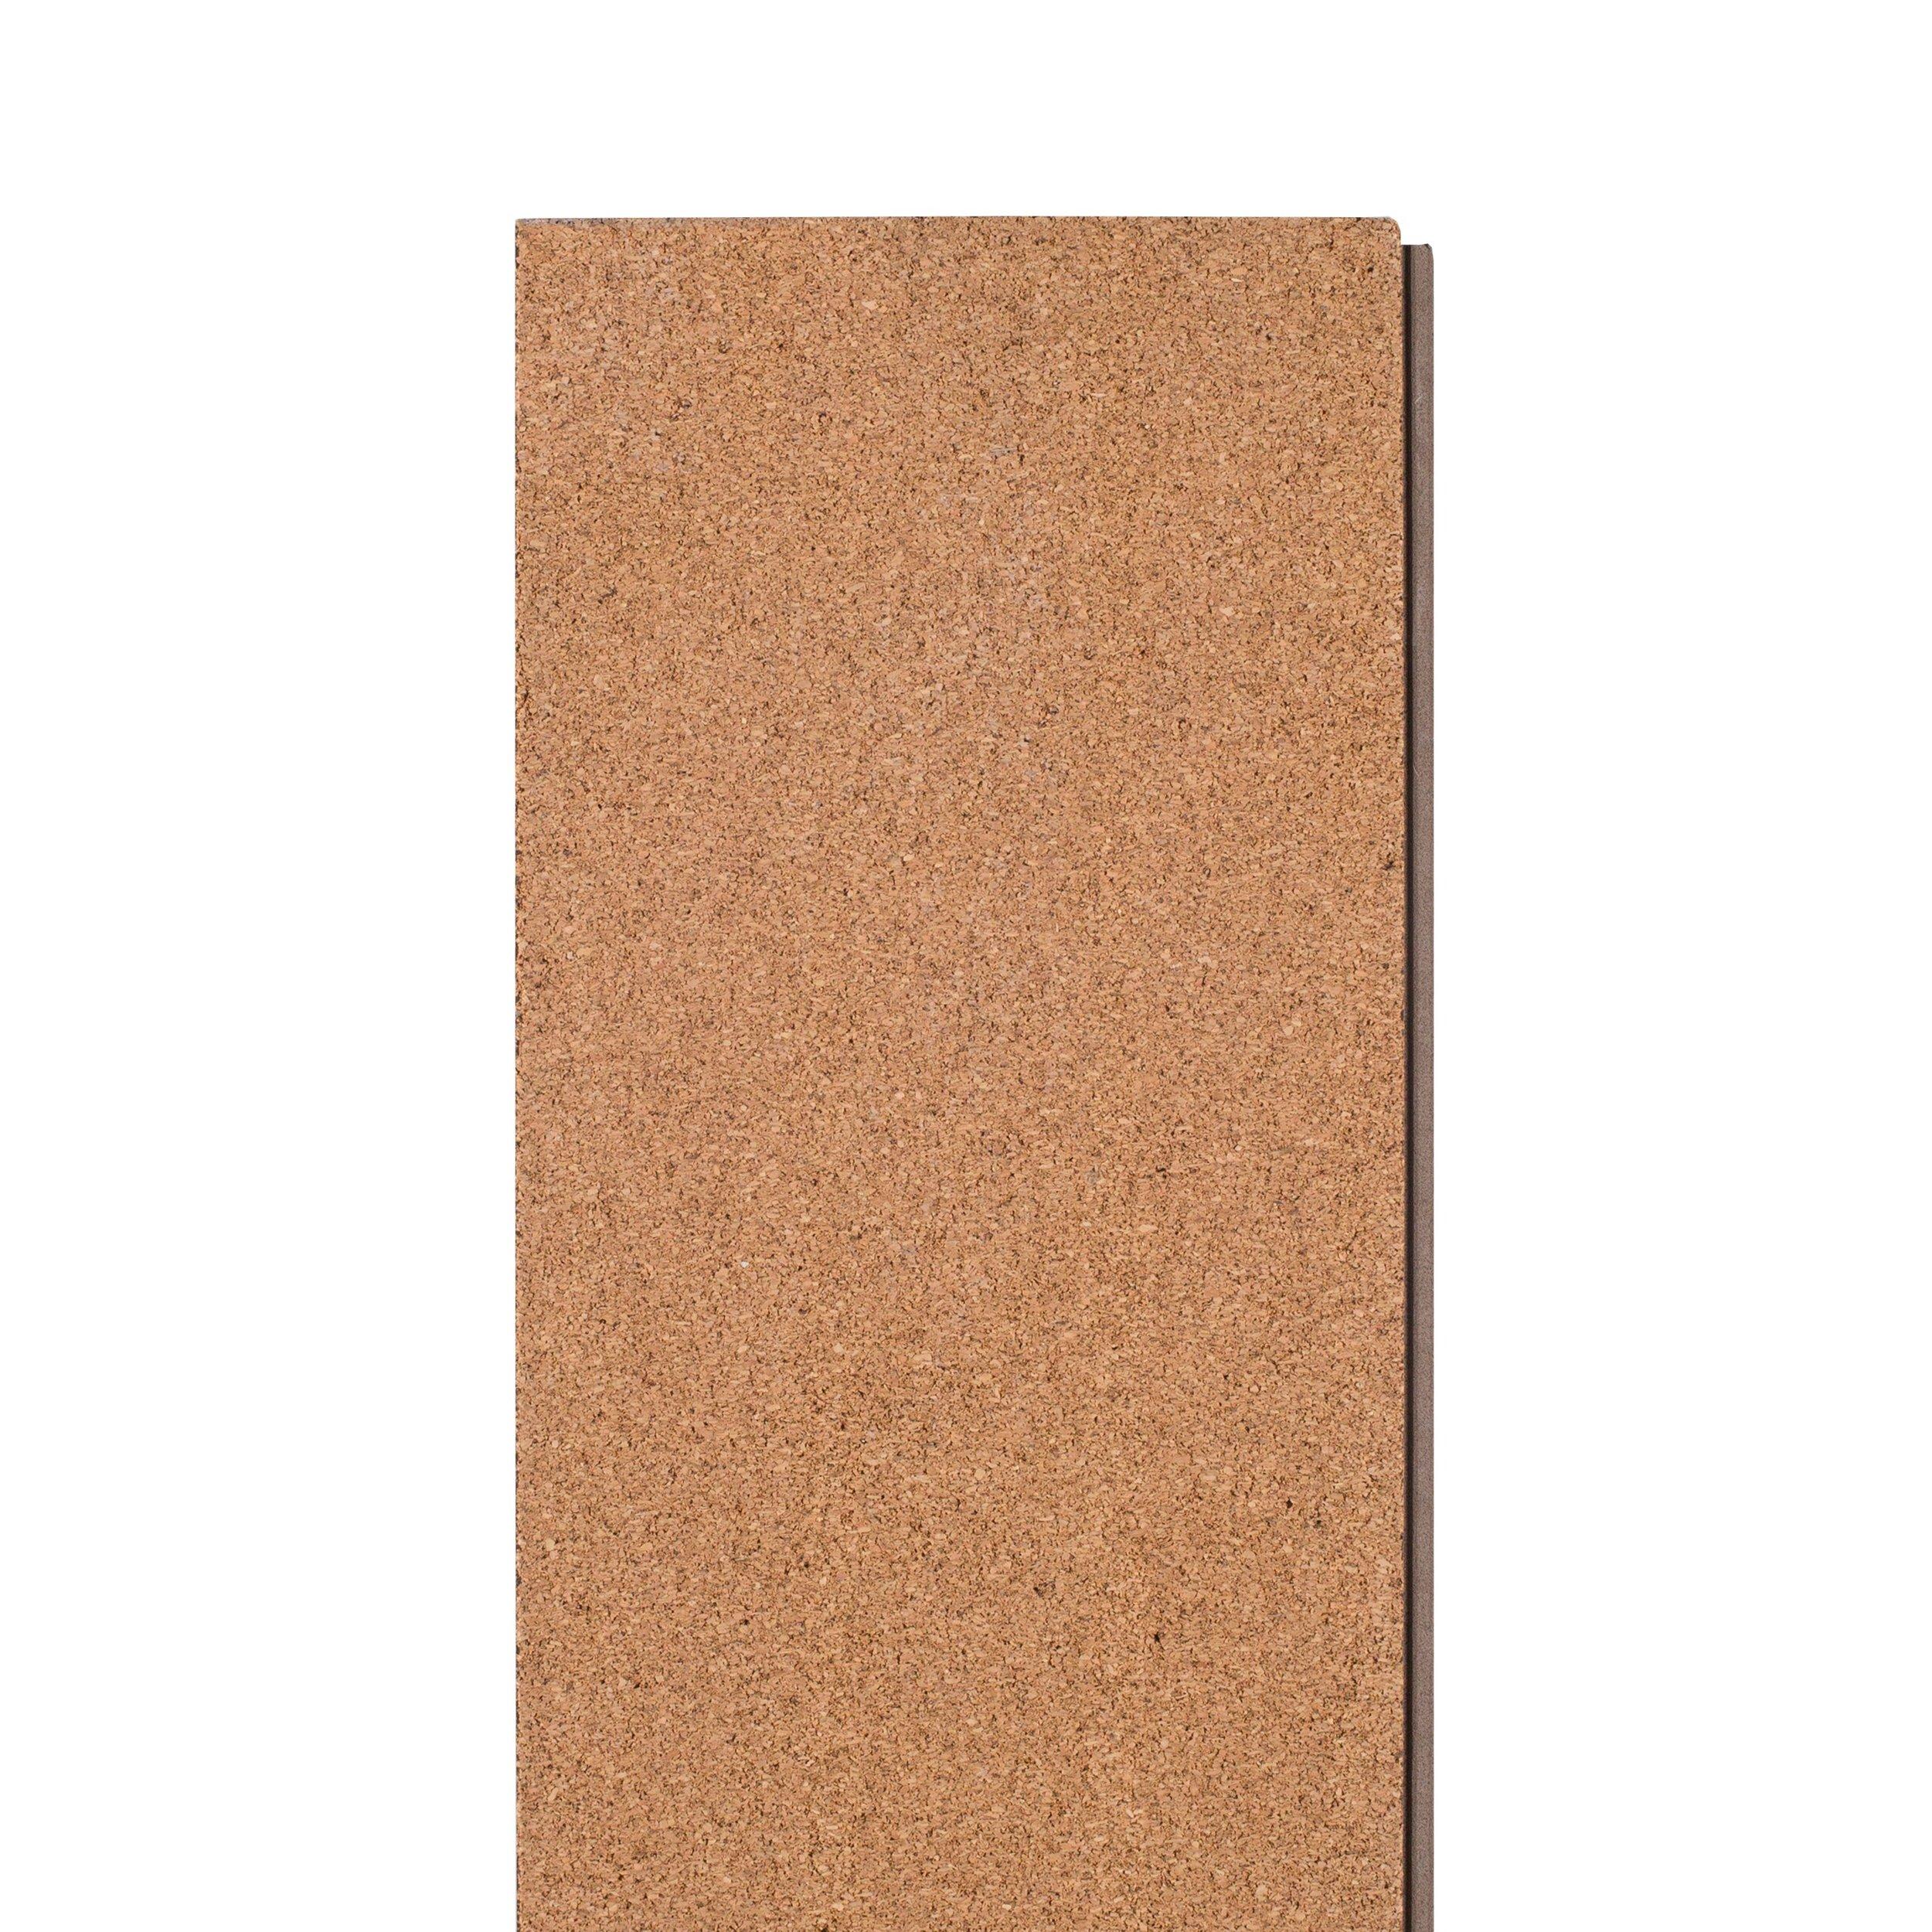 Torrione Rigid Core Luxury Vinyl Tile - Cork Back